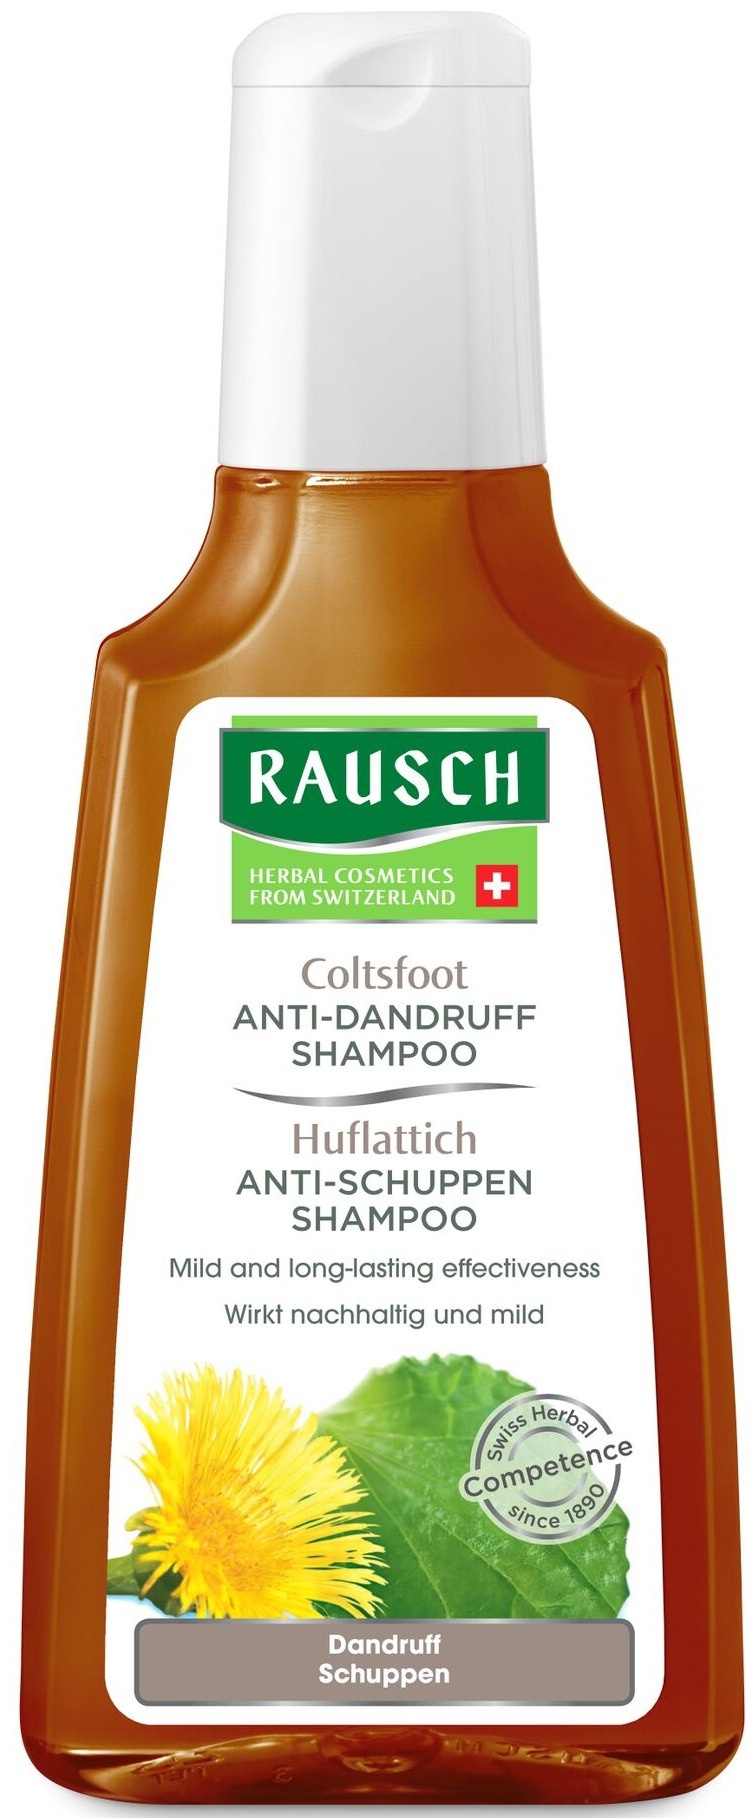 Rausch Coltsfoot Antidandruff Shampoo